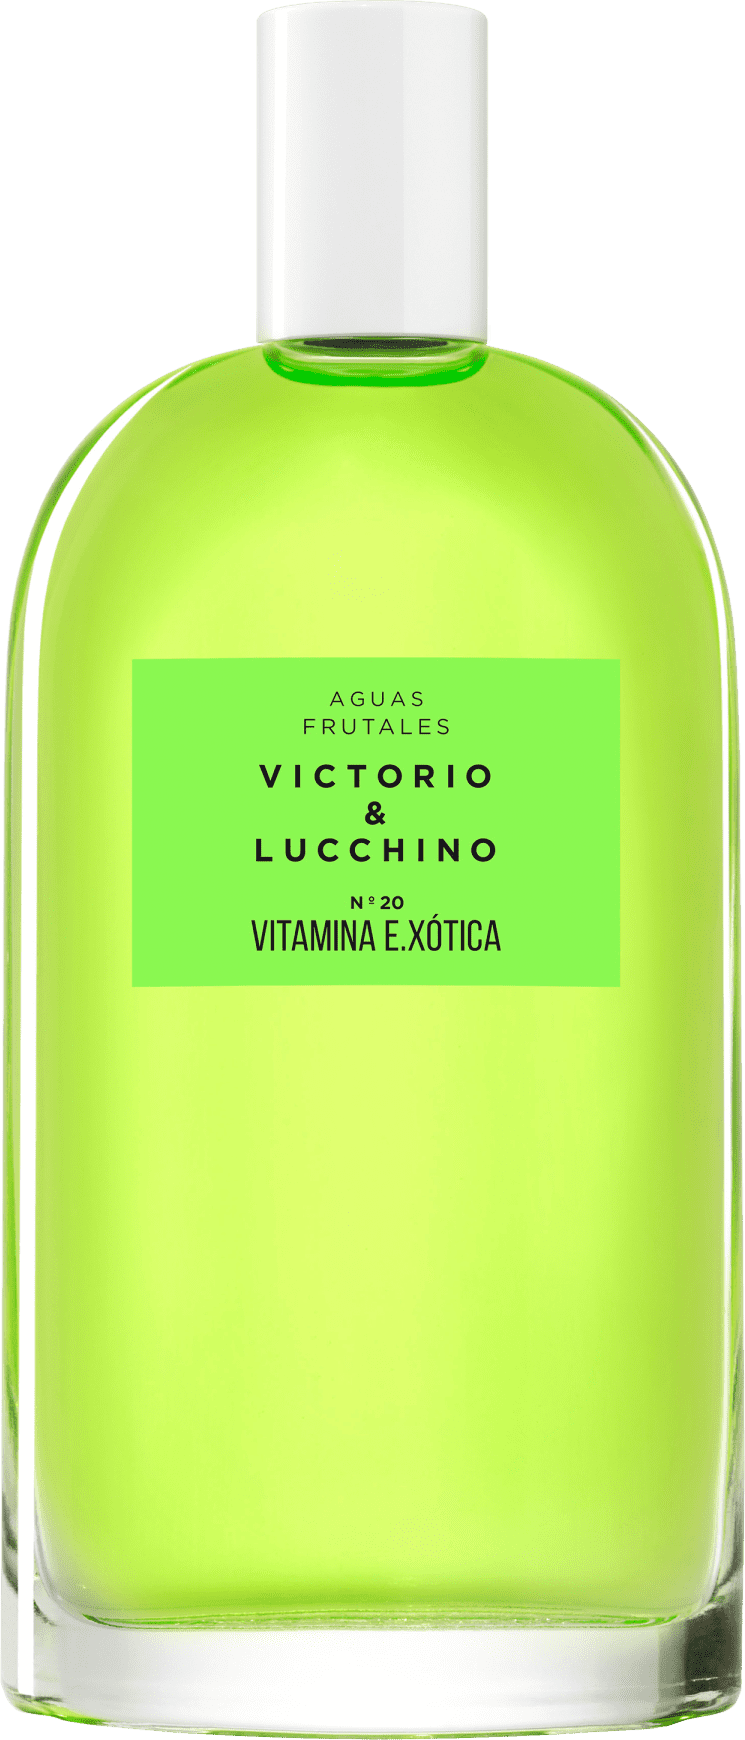 Victorio & Lucchino N20 Vitamina Exotica Eau De Toilette - Perfumerías Ana